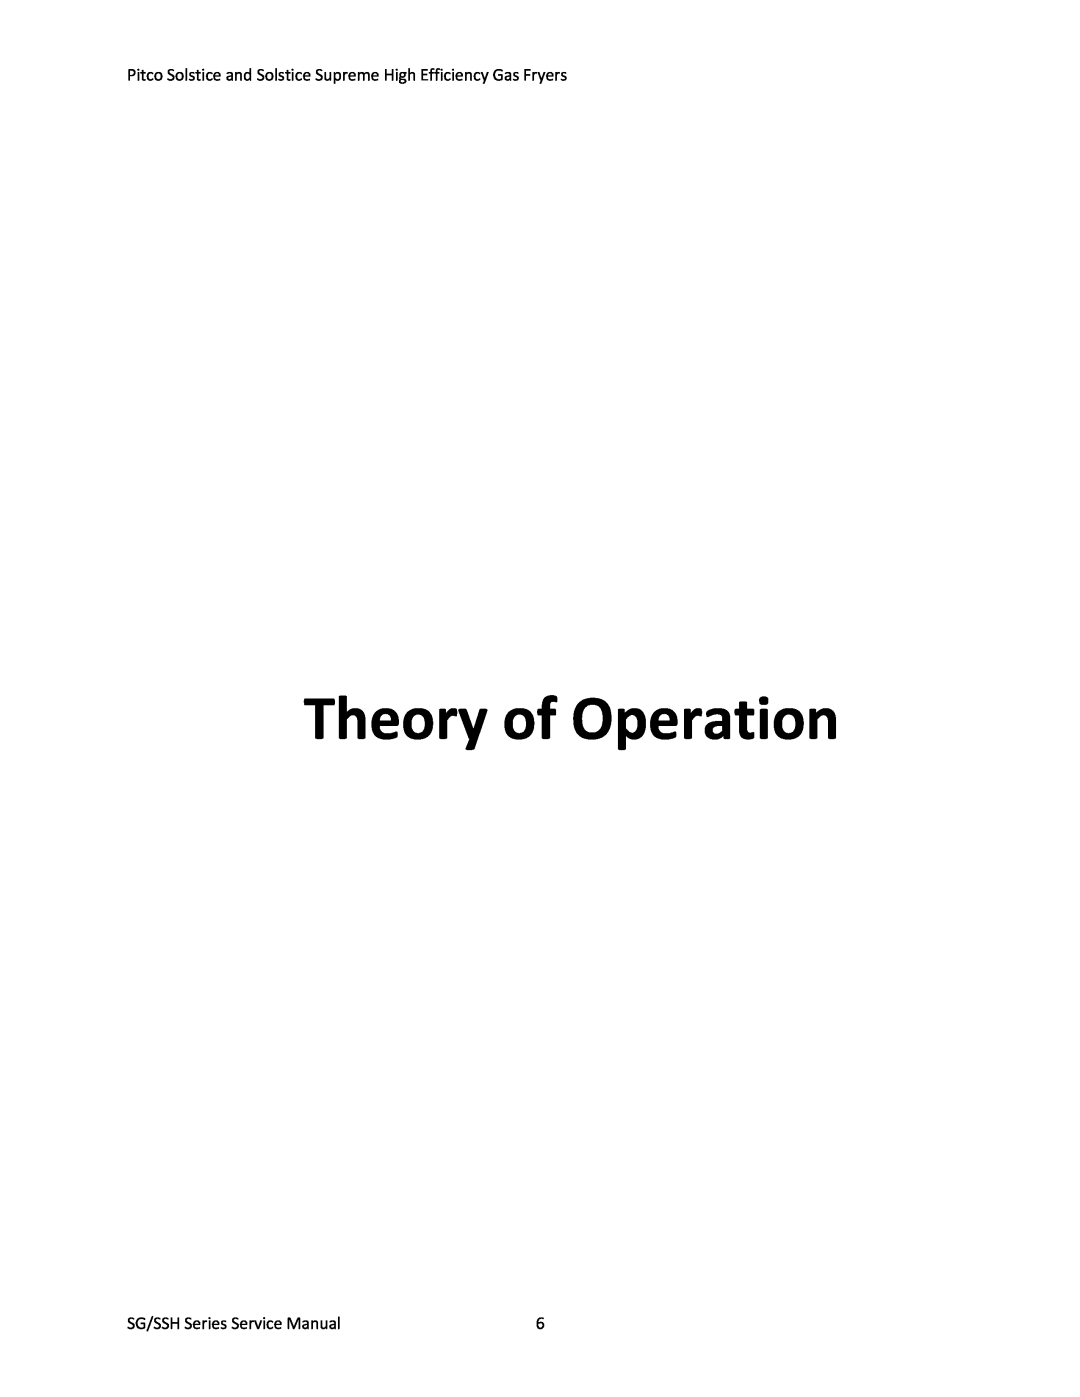 Pitco Frialator L22-345 manual Theory of Operation, SG/SSH Series Service Manual 